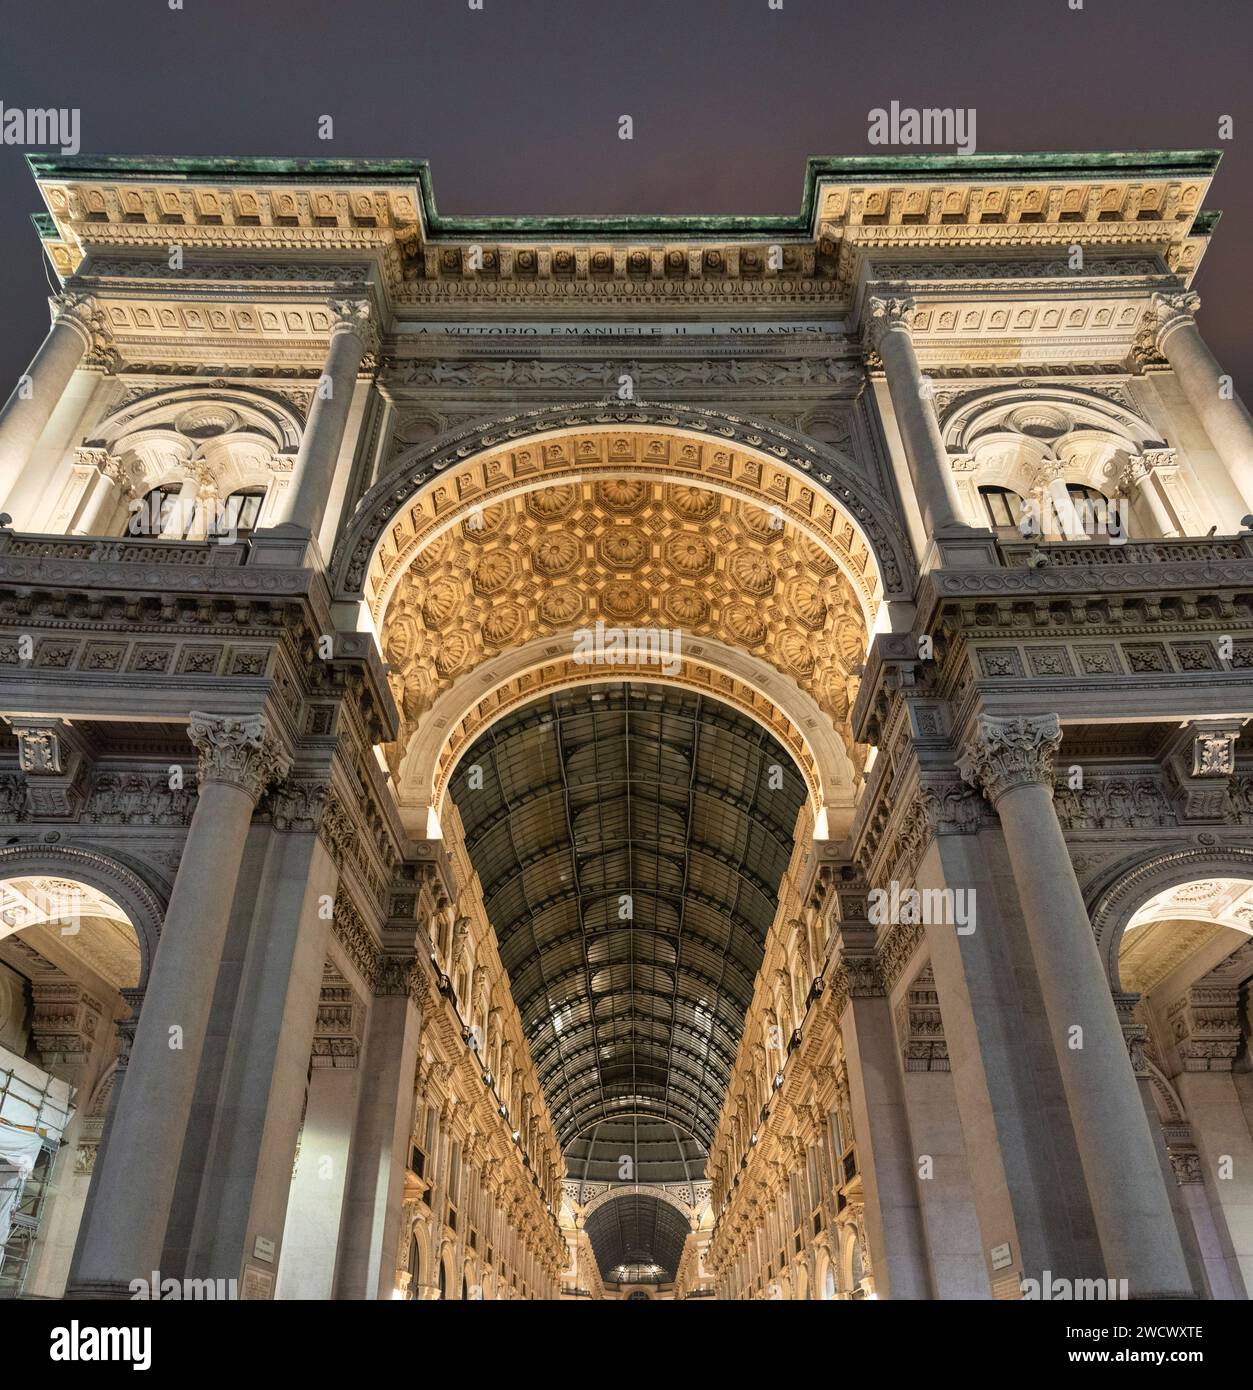 Italy, Lombardie, Milan, Dome Square, Galleria Vittorio Emanuele II prestigious historic shopping gallery in neoclassical style Stock Photo